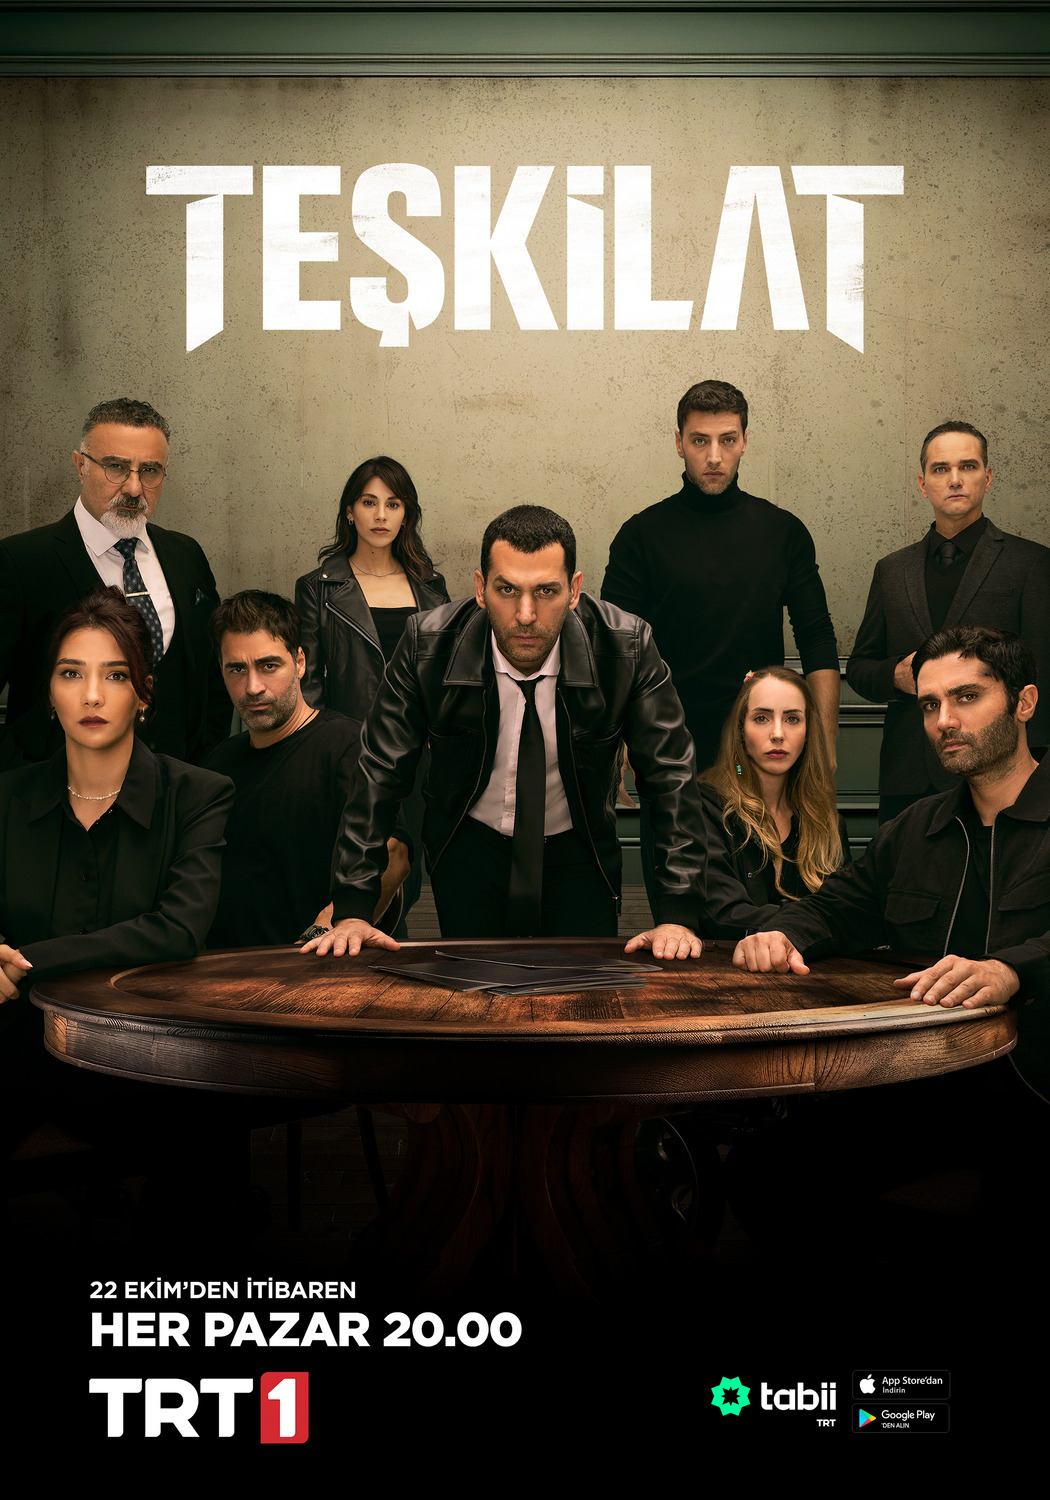 Extra Large TV Poster Image for Teskilat (#1 of 2)